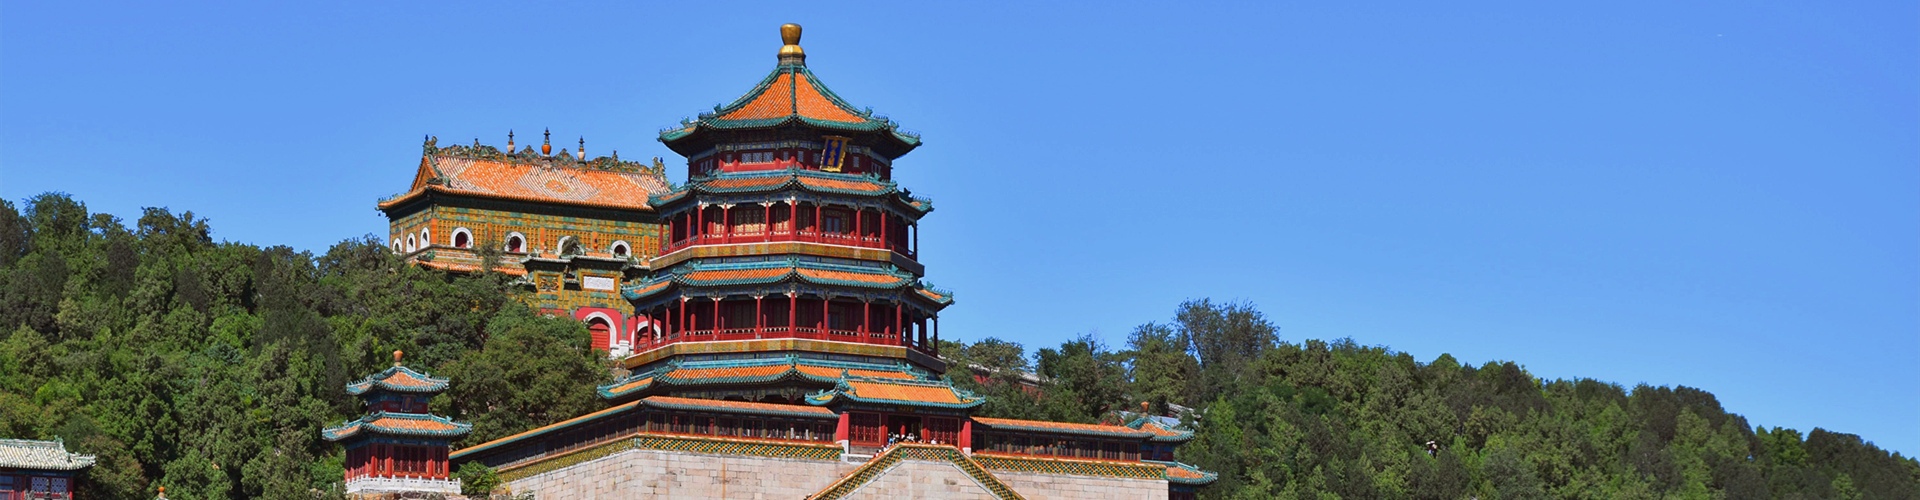 Summer Palace - a Masterpiece of Chinese Garden Design